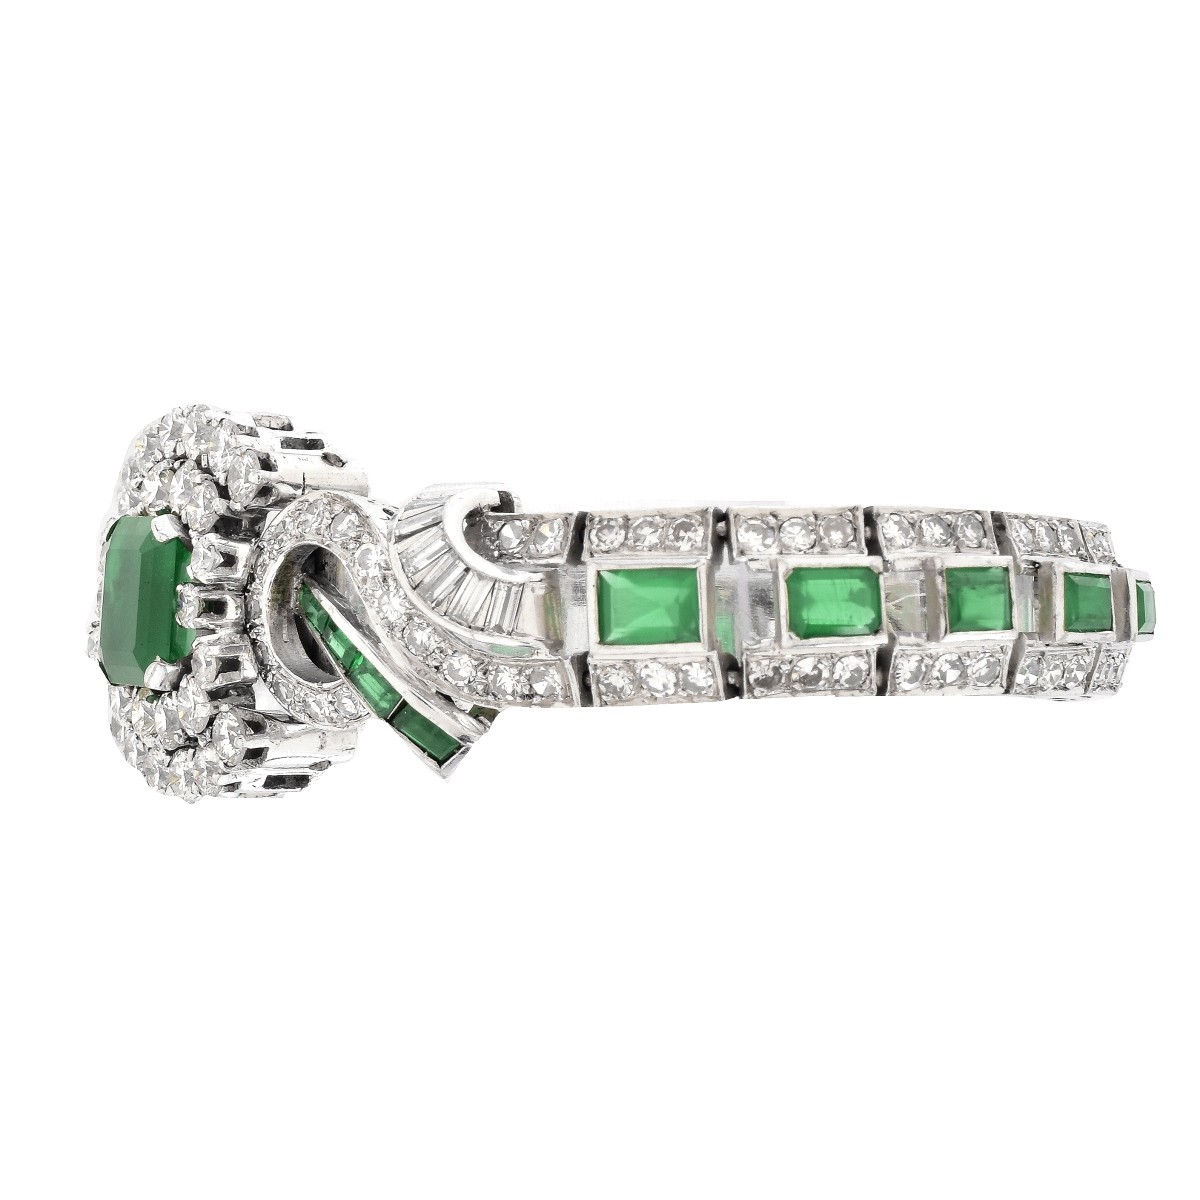 Art Deco Diamond and Emerald Bracelet